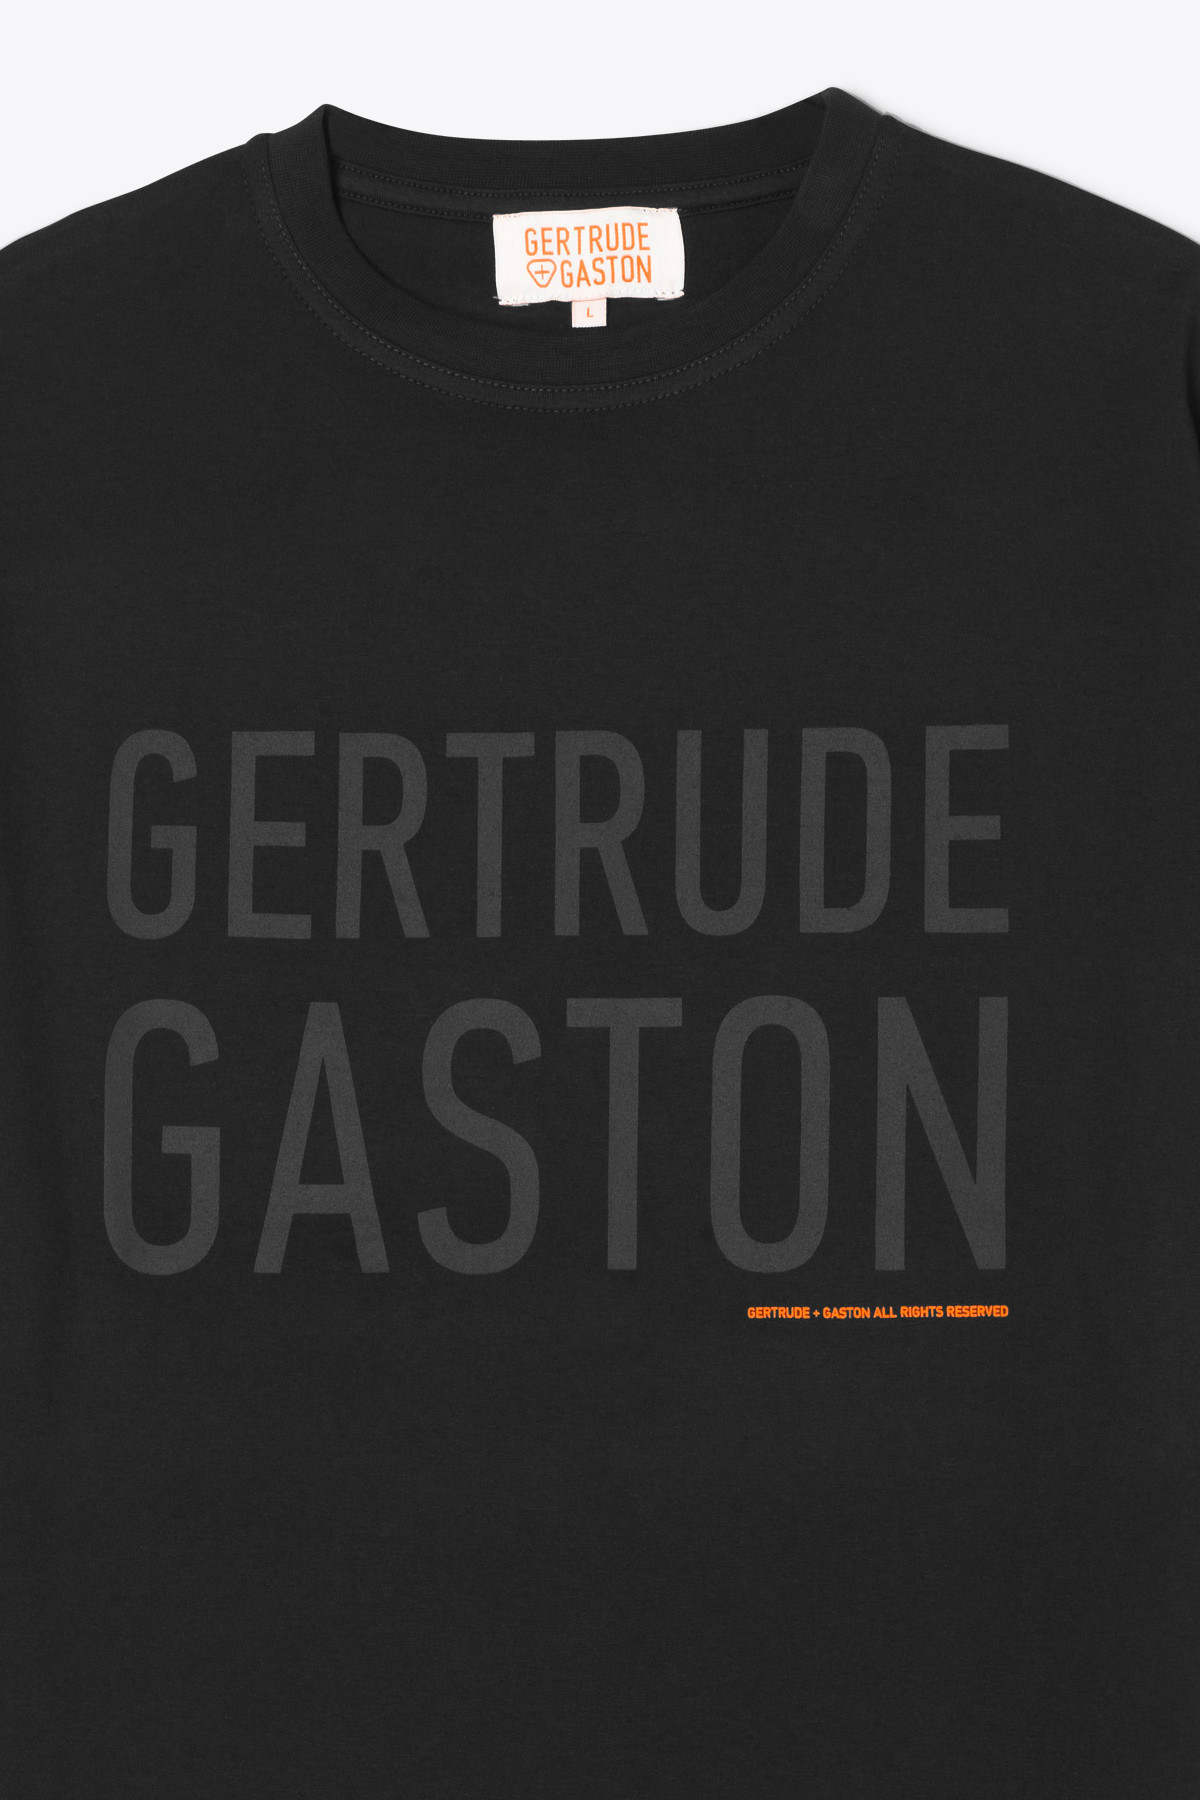 T-shirt homme LEOPOLD black GertrudeGaston